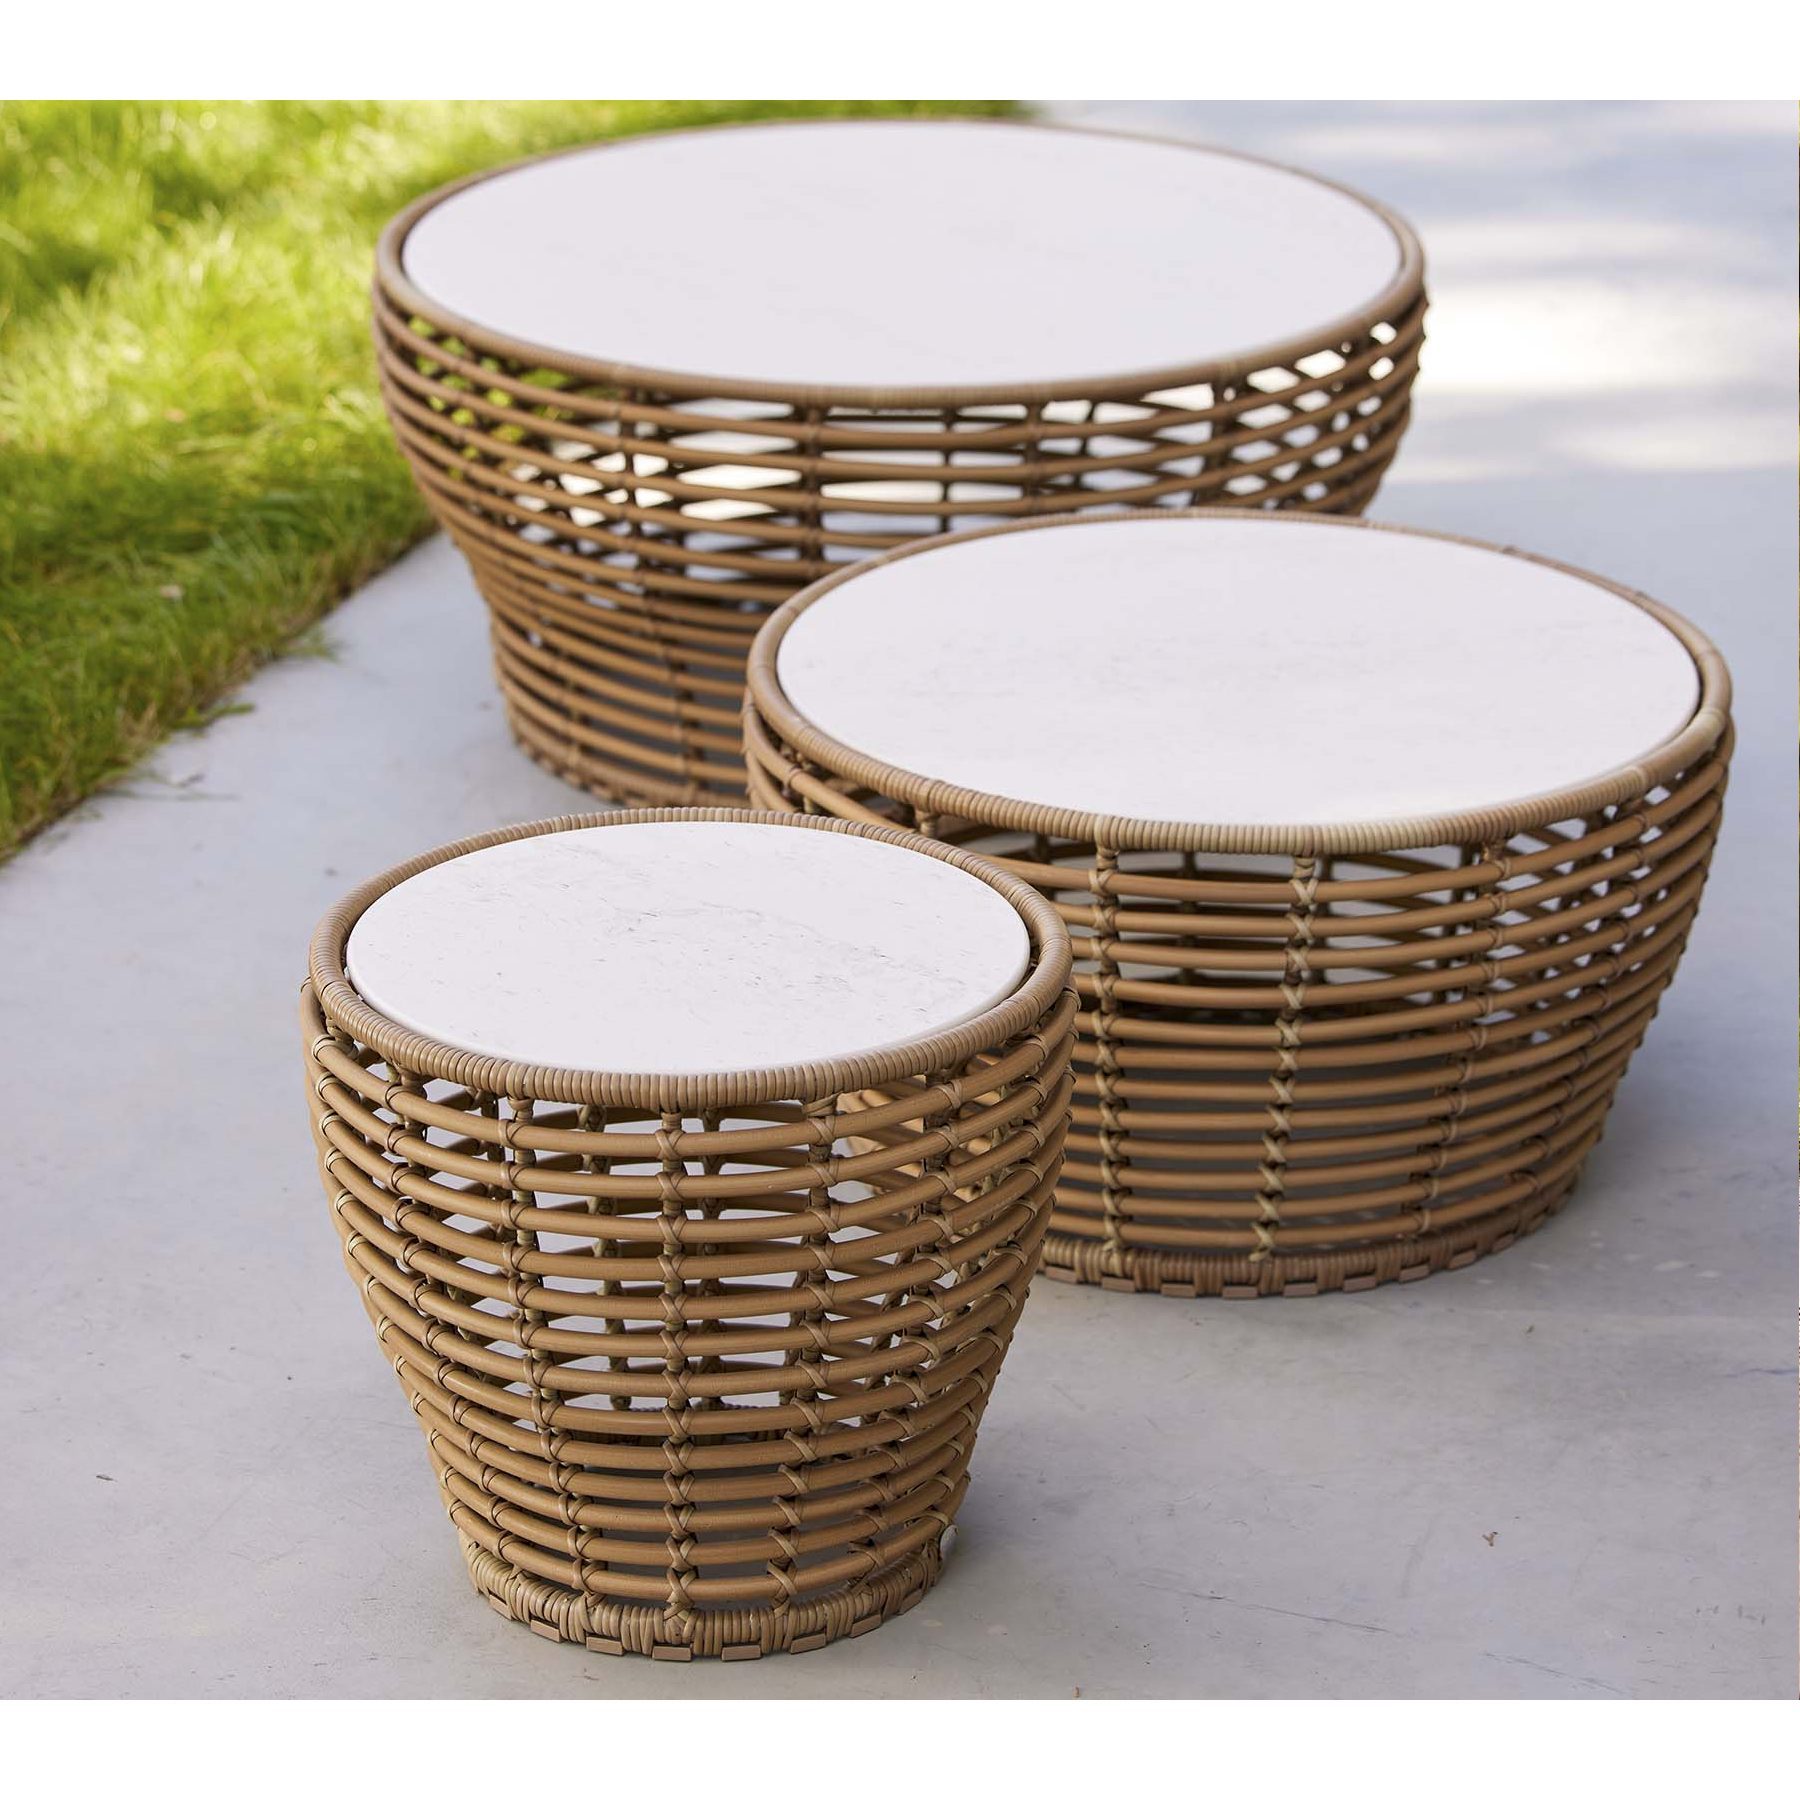 Cane-line "Basket" Loungetisch, Geflecht natur, Tischplatte Keramik Travertin-Optik